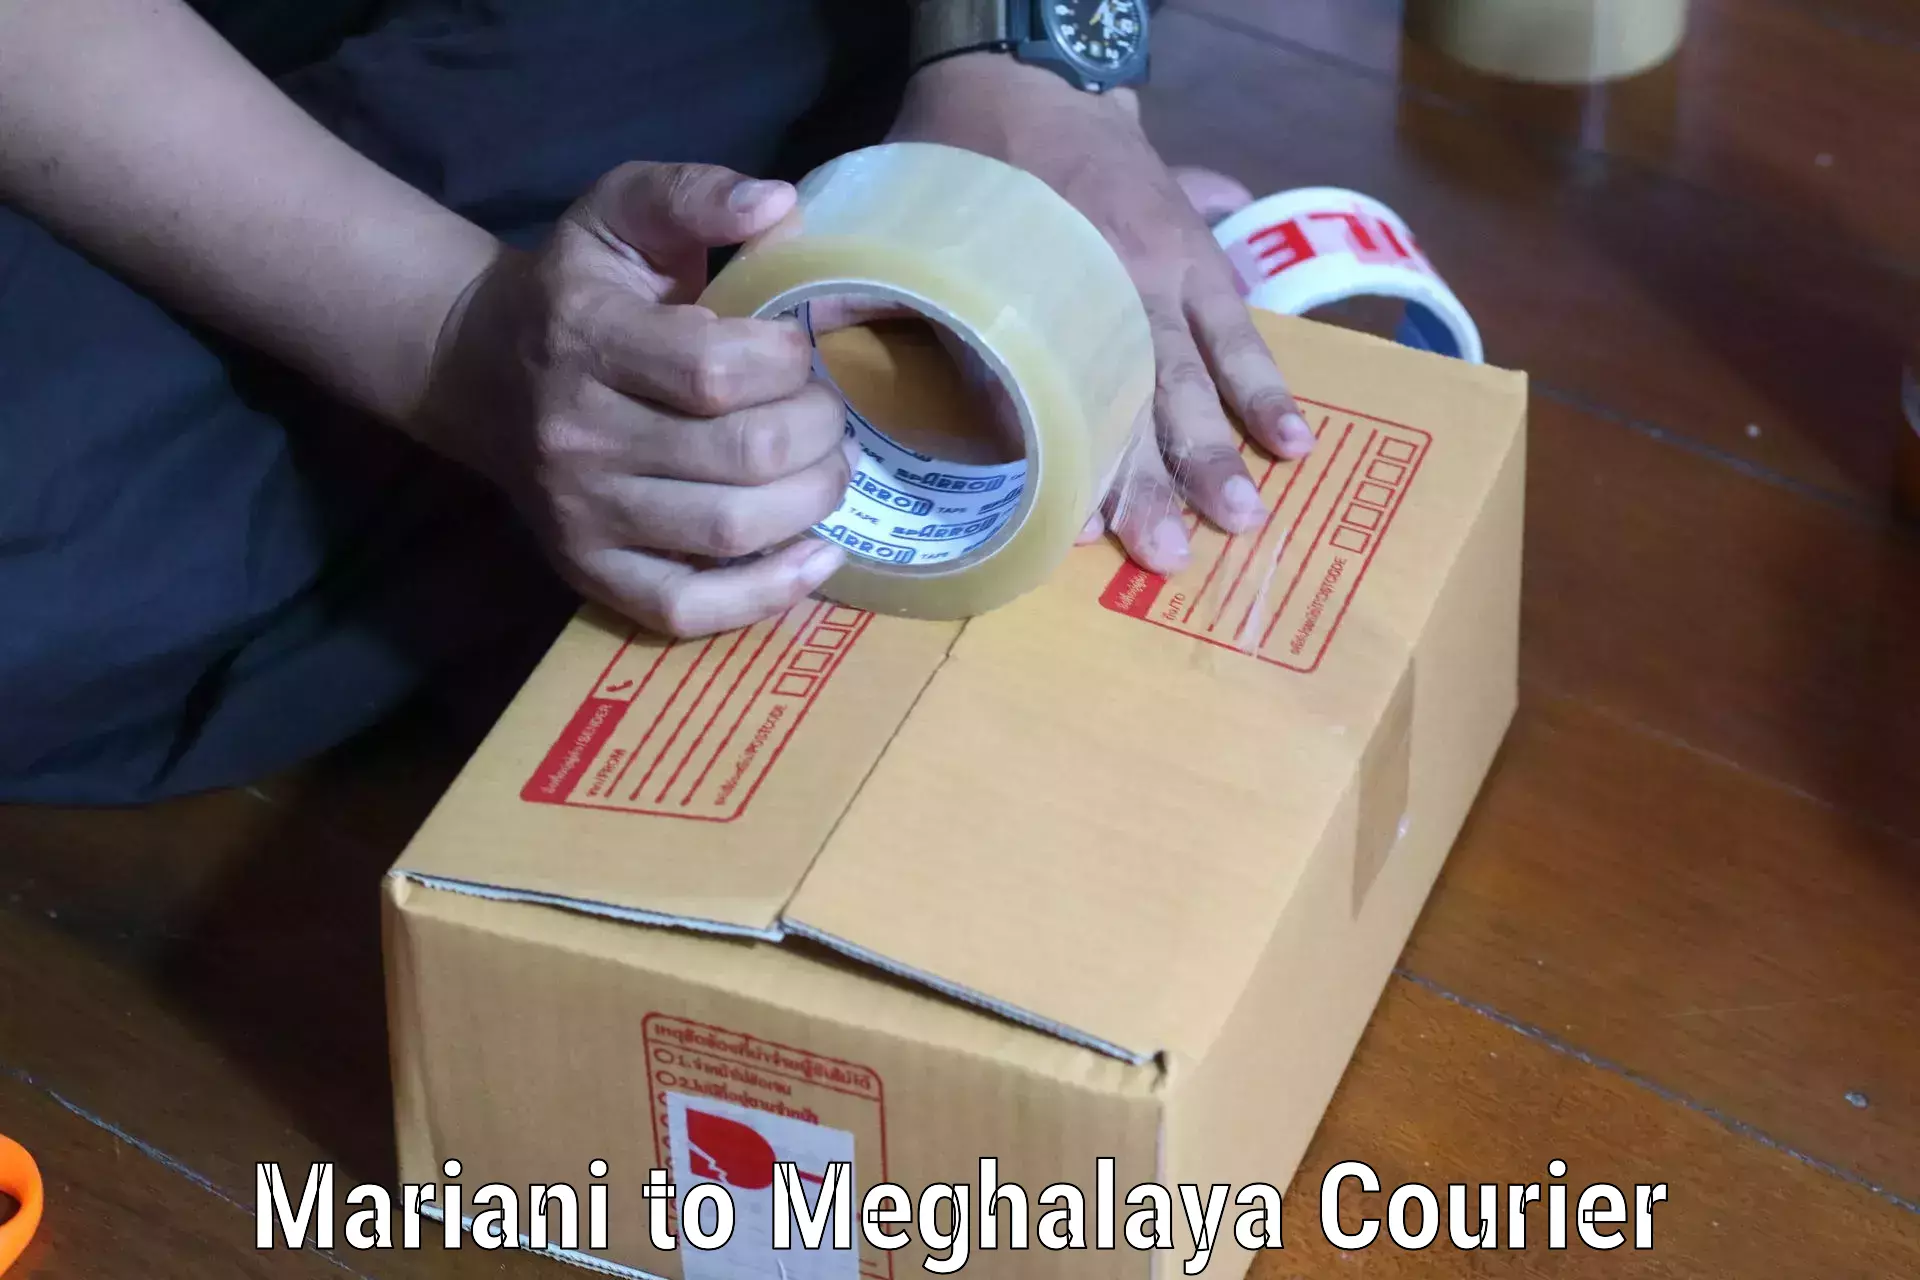 Courier service comparison Mariani to Meghalaya